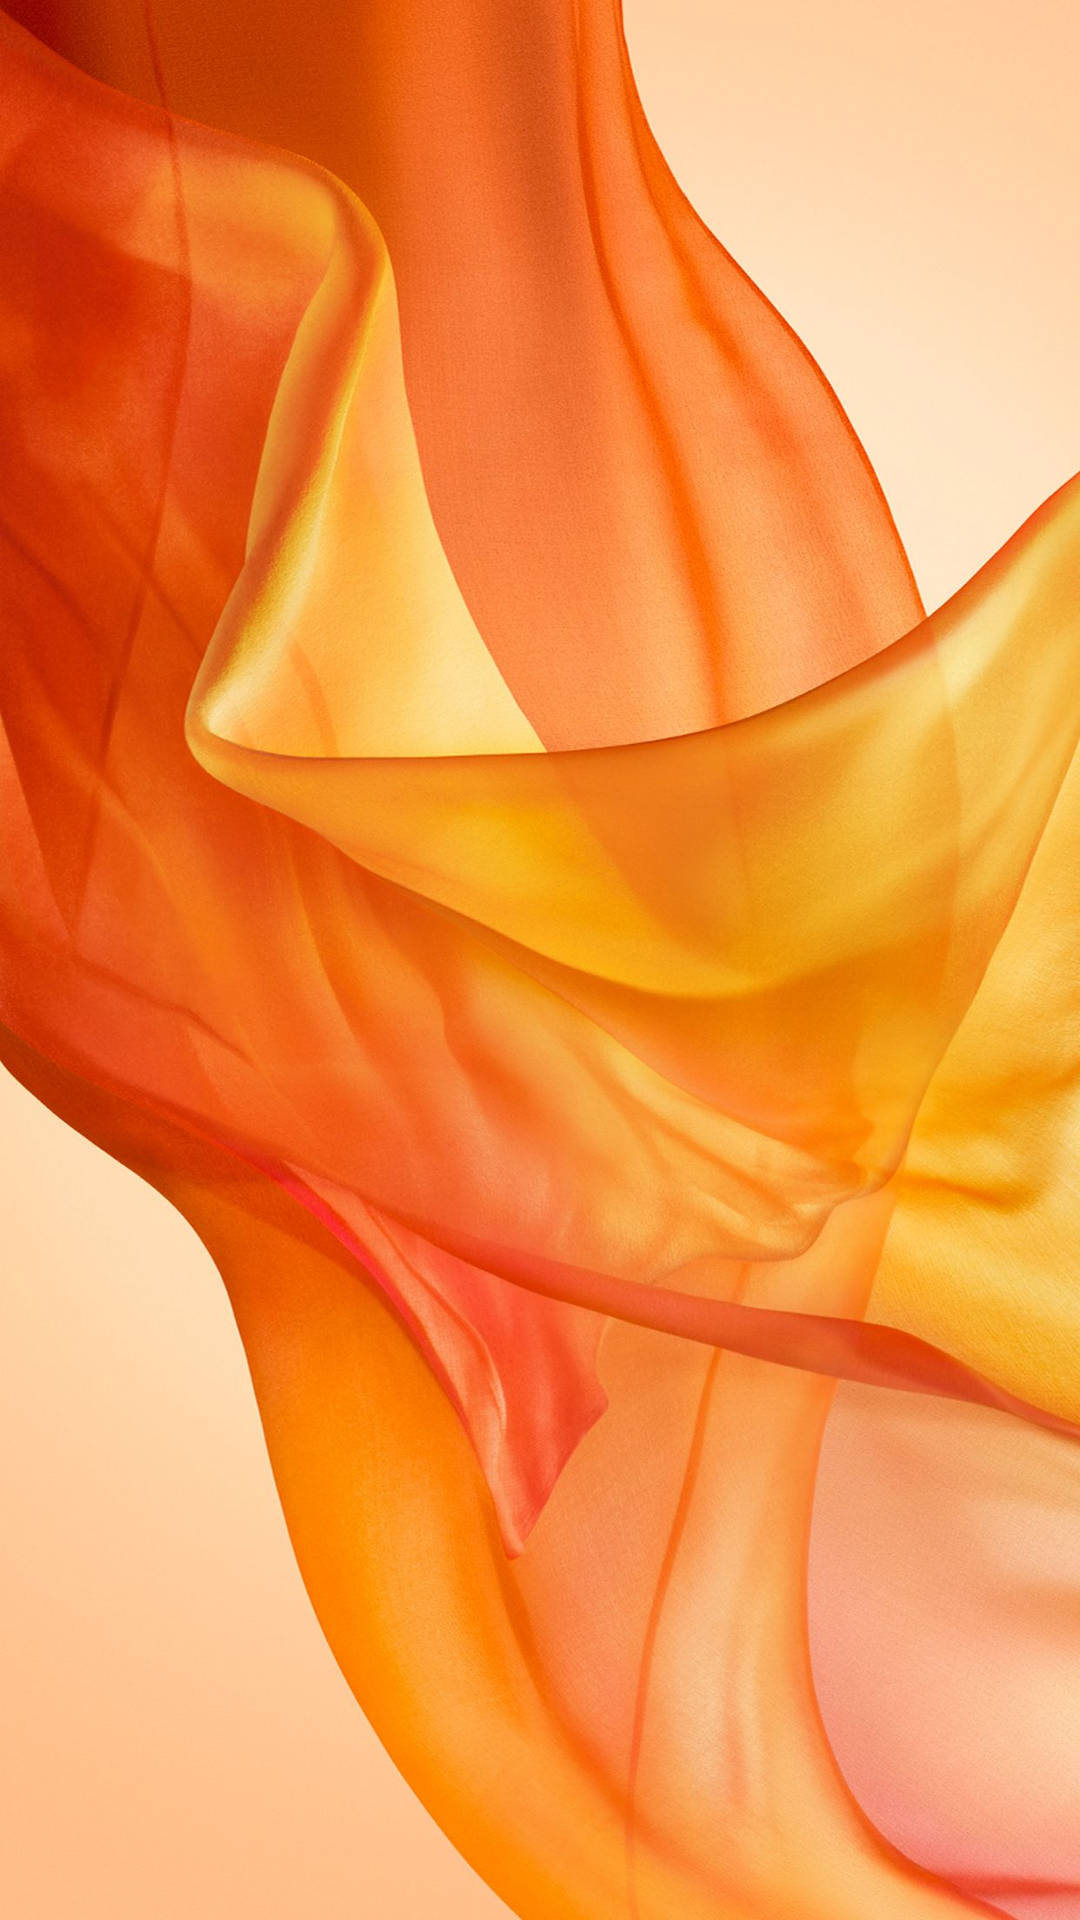 Ipad Pro Orange Cloth Waving Wallpaper